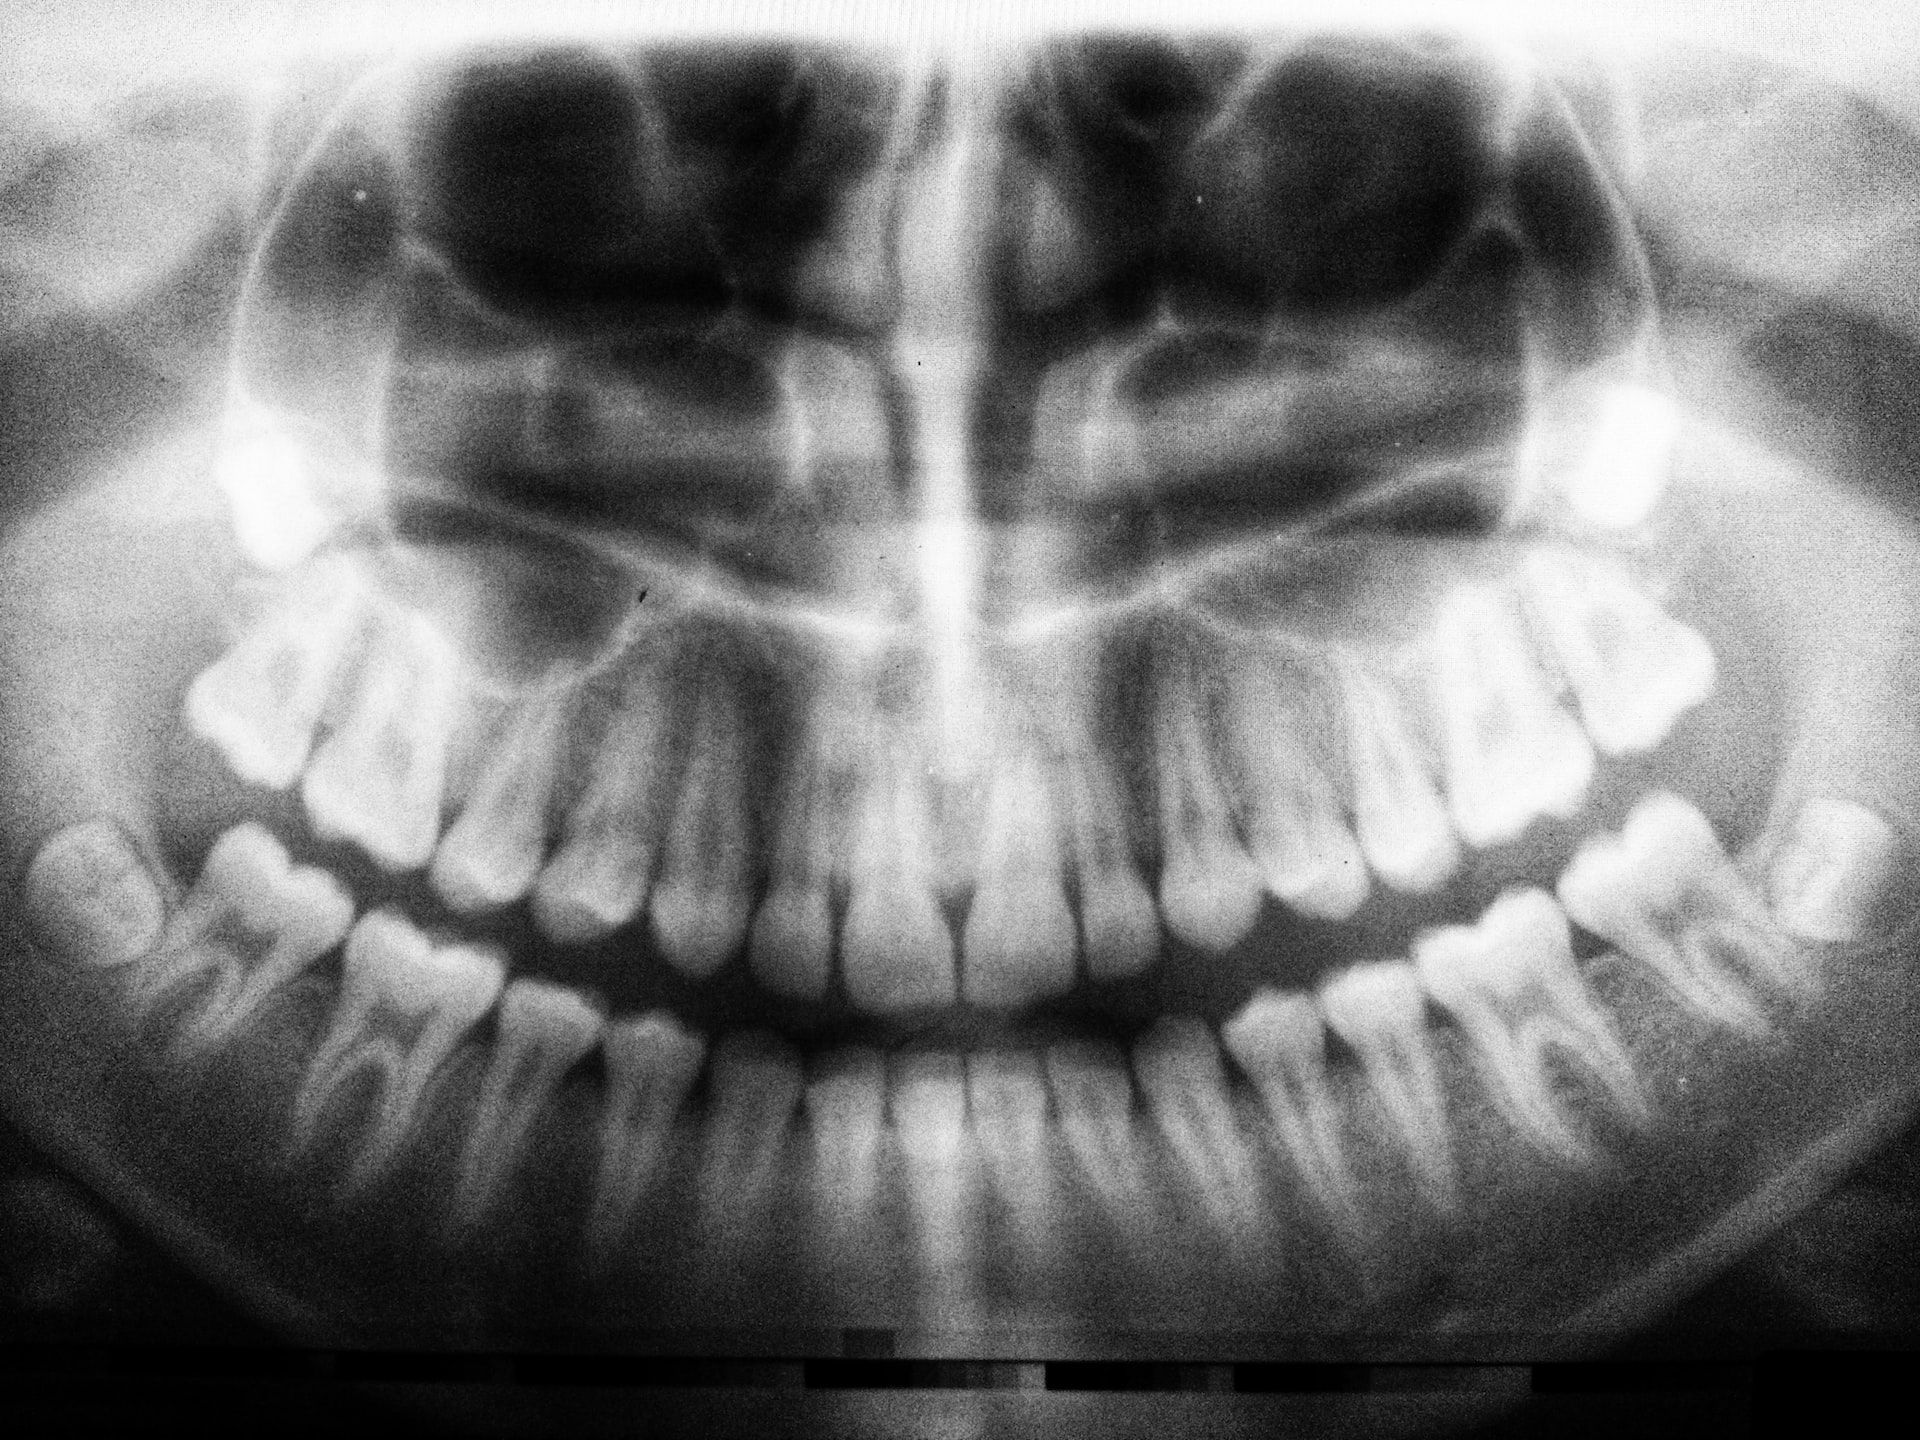 dental radiology fmx